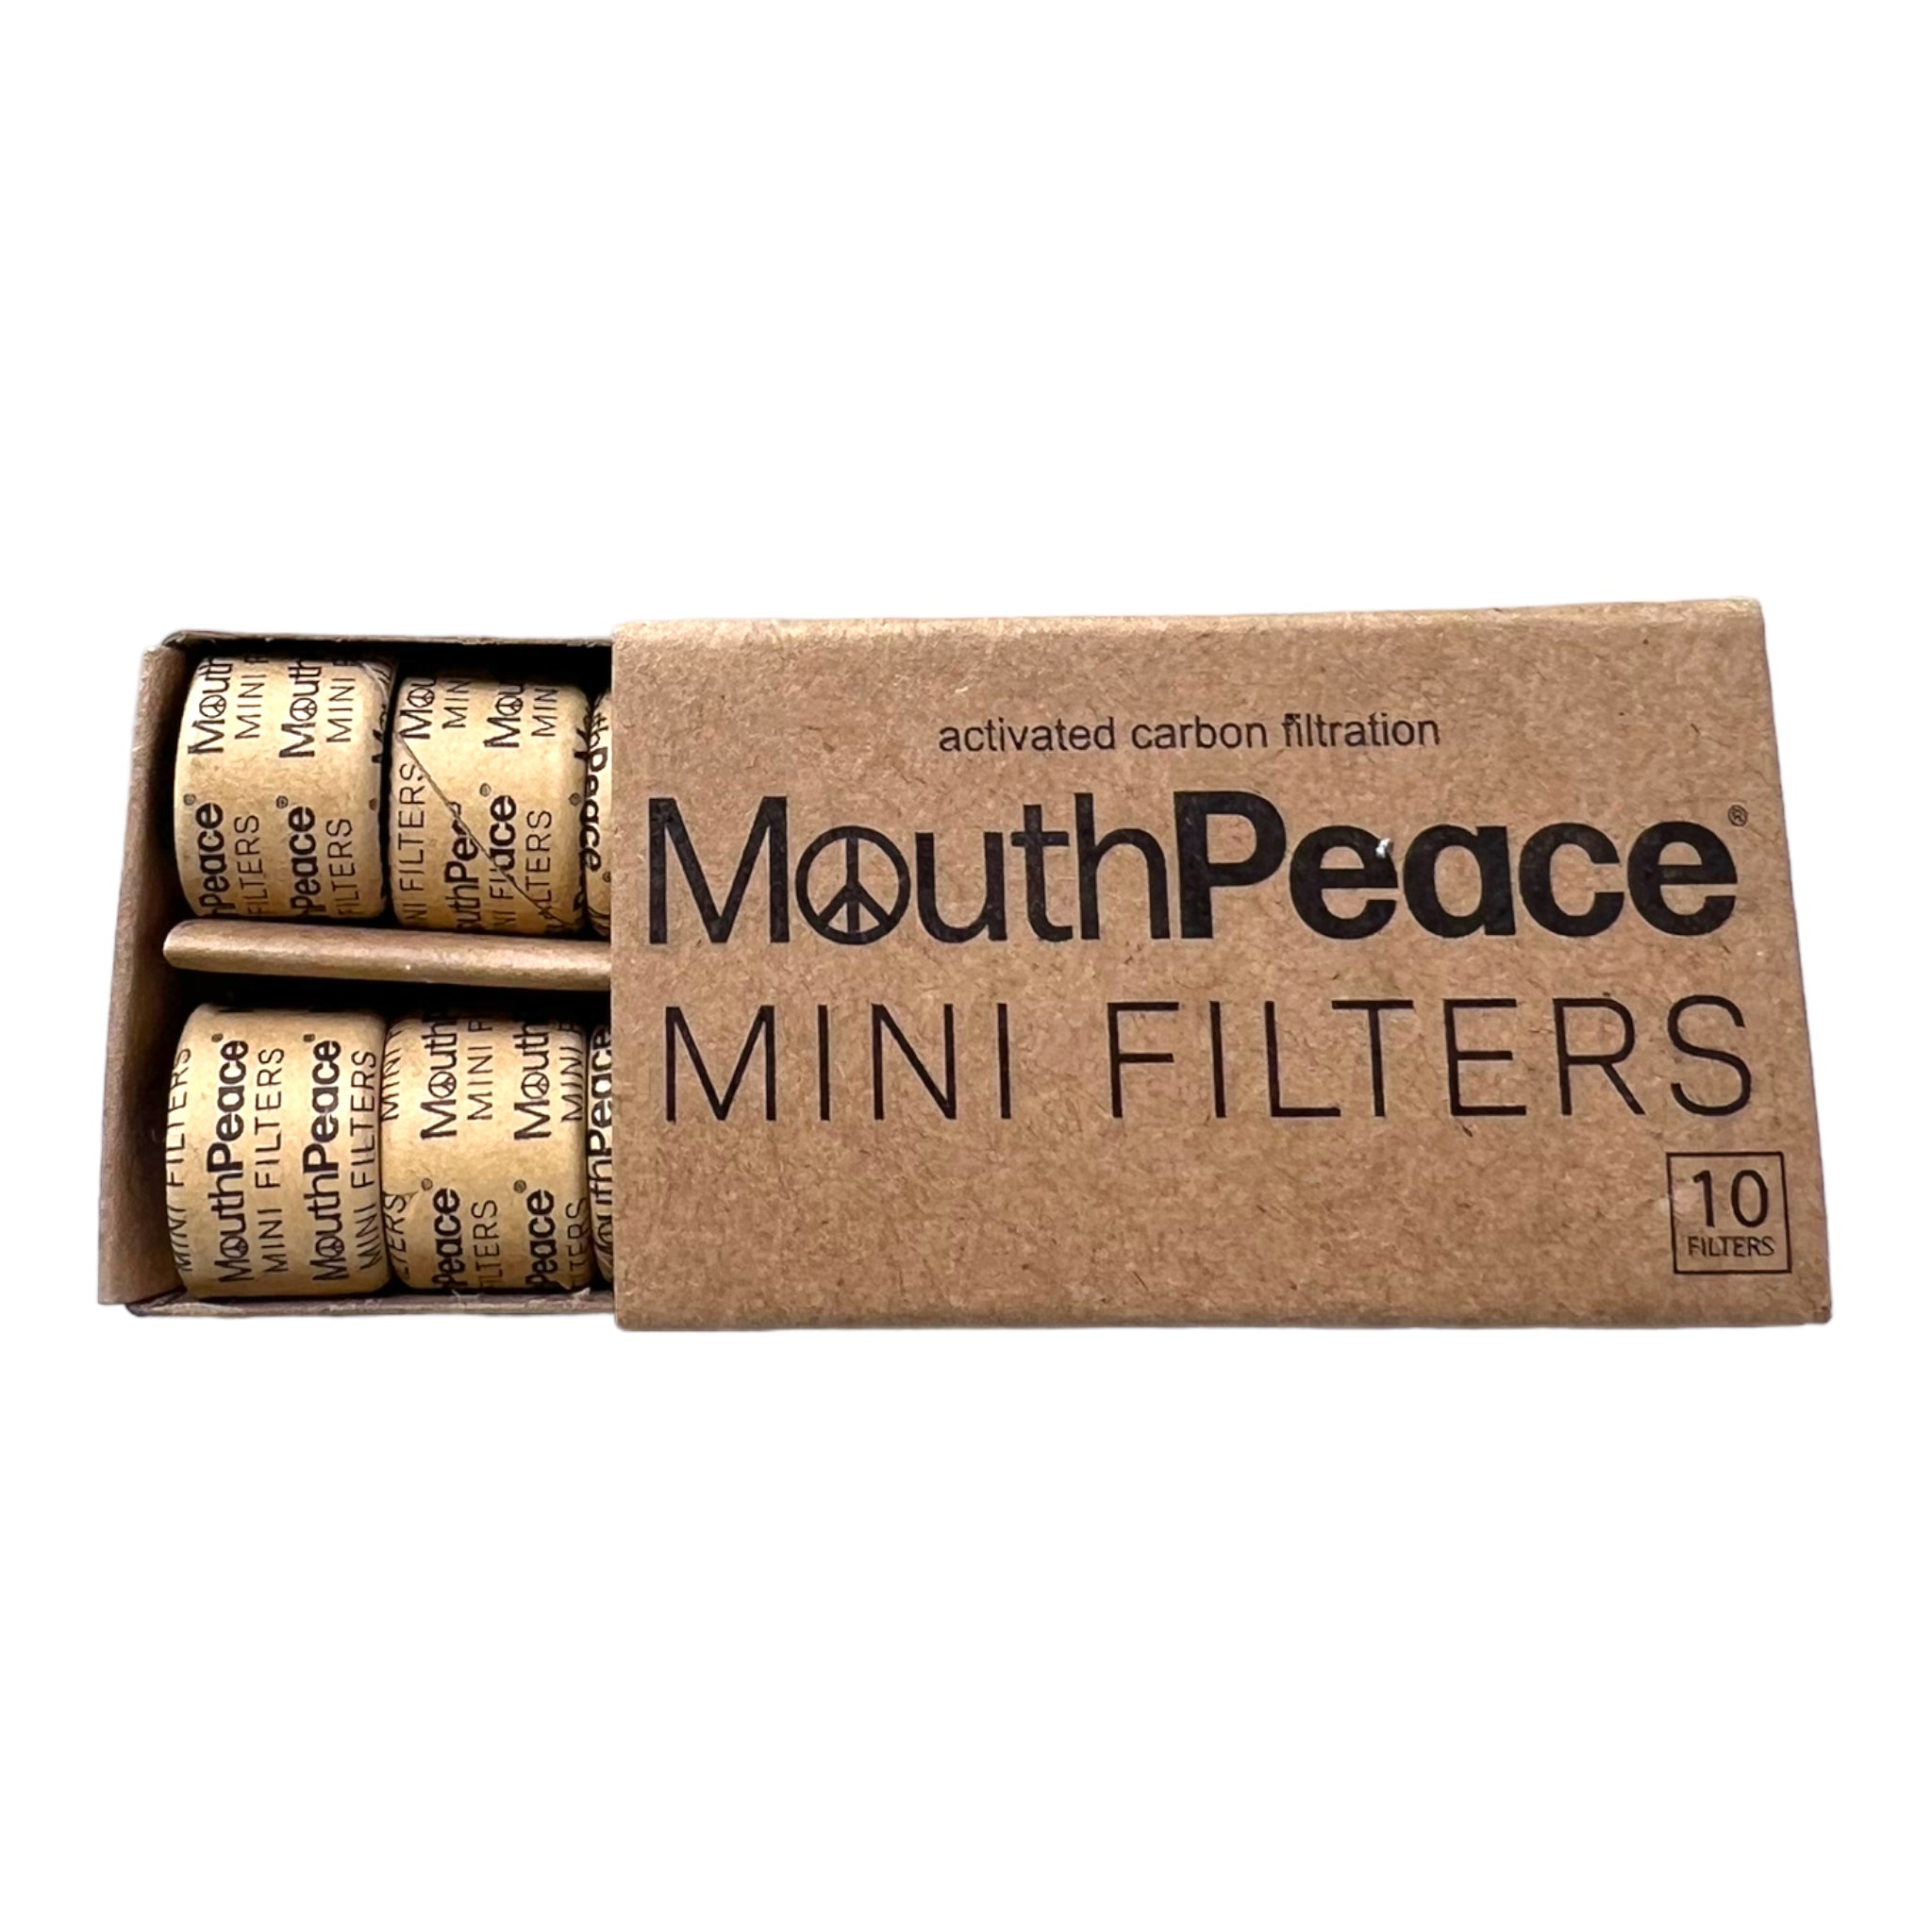 Mouth Peace Mini Filters